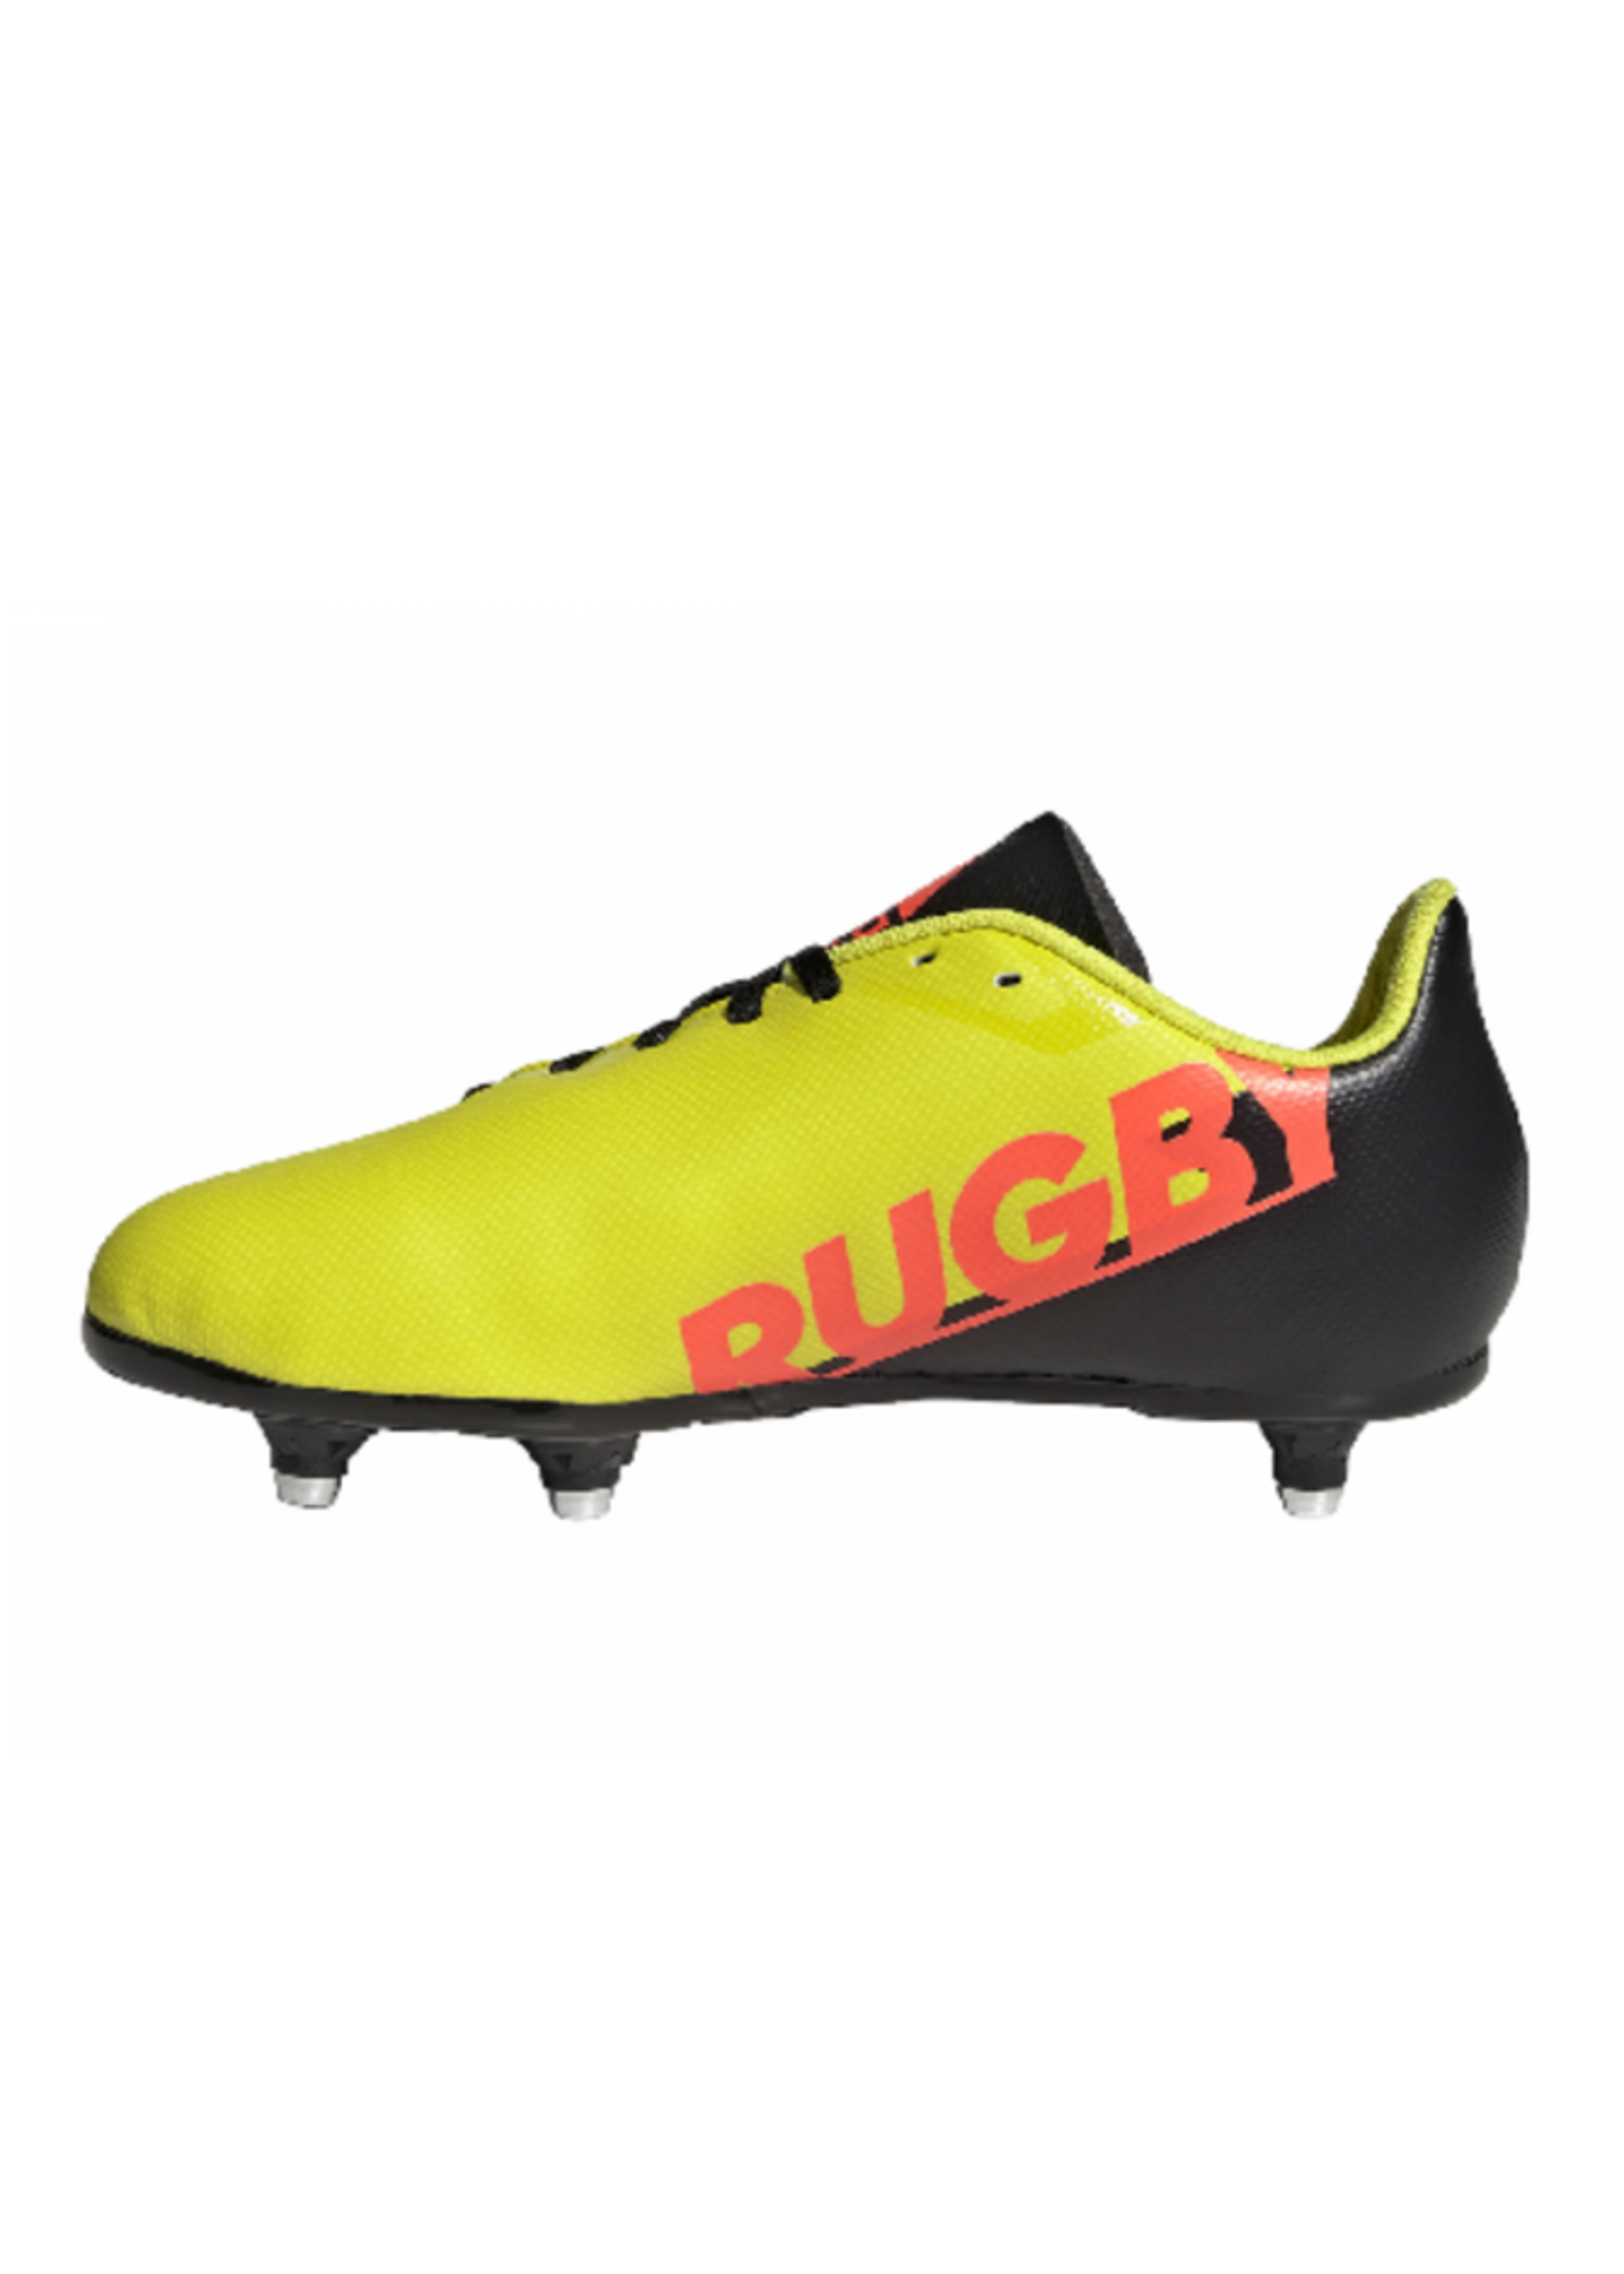 Adidas Adidas Rugby Junior Rugby Boot - SG (2021)